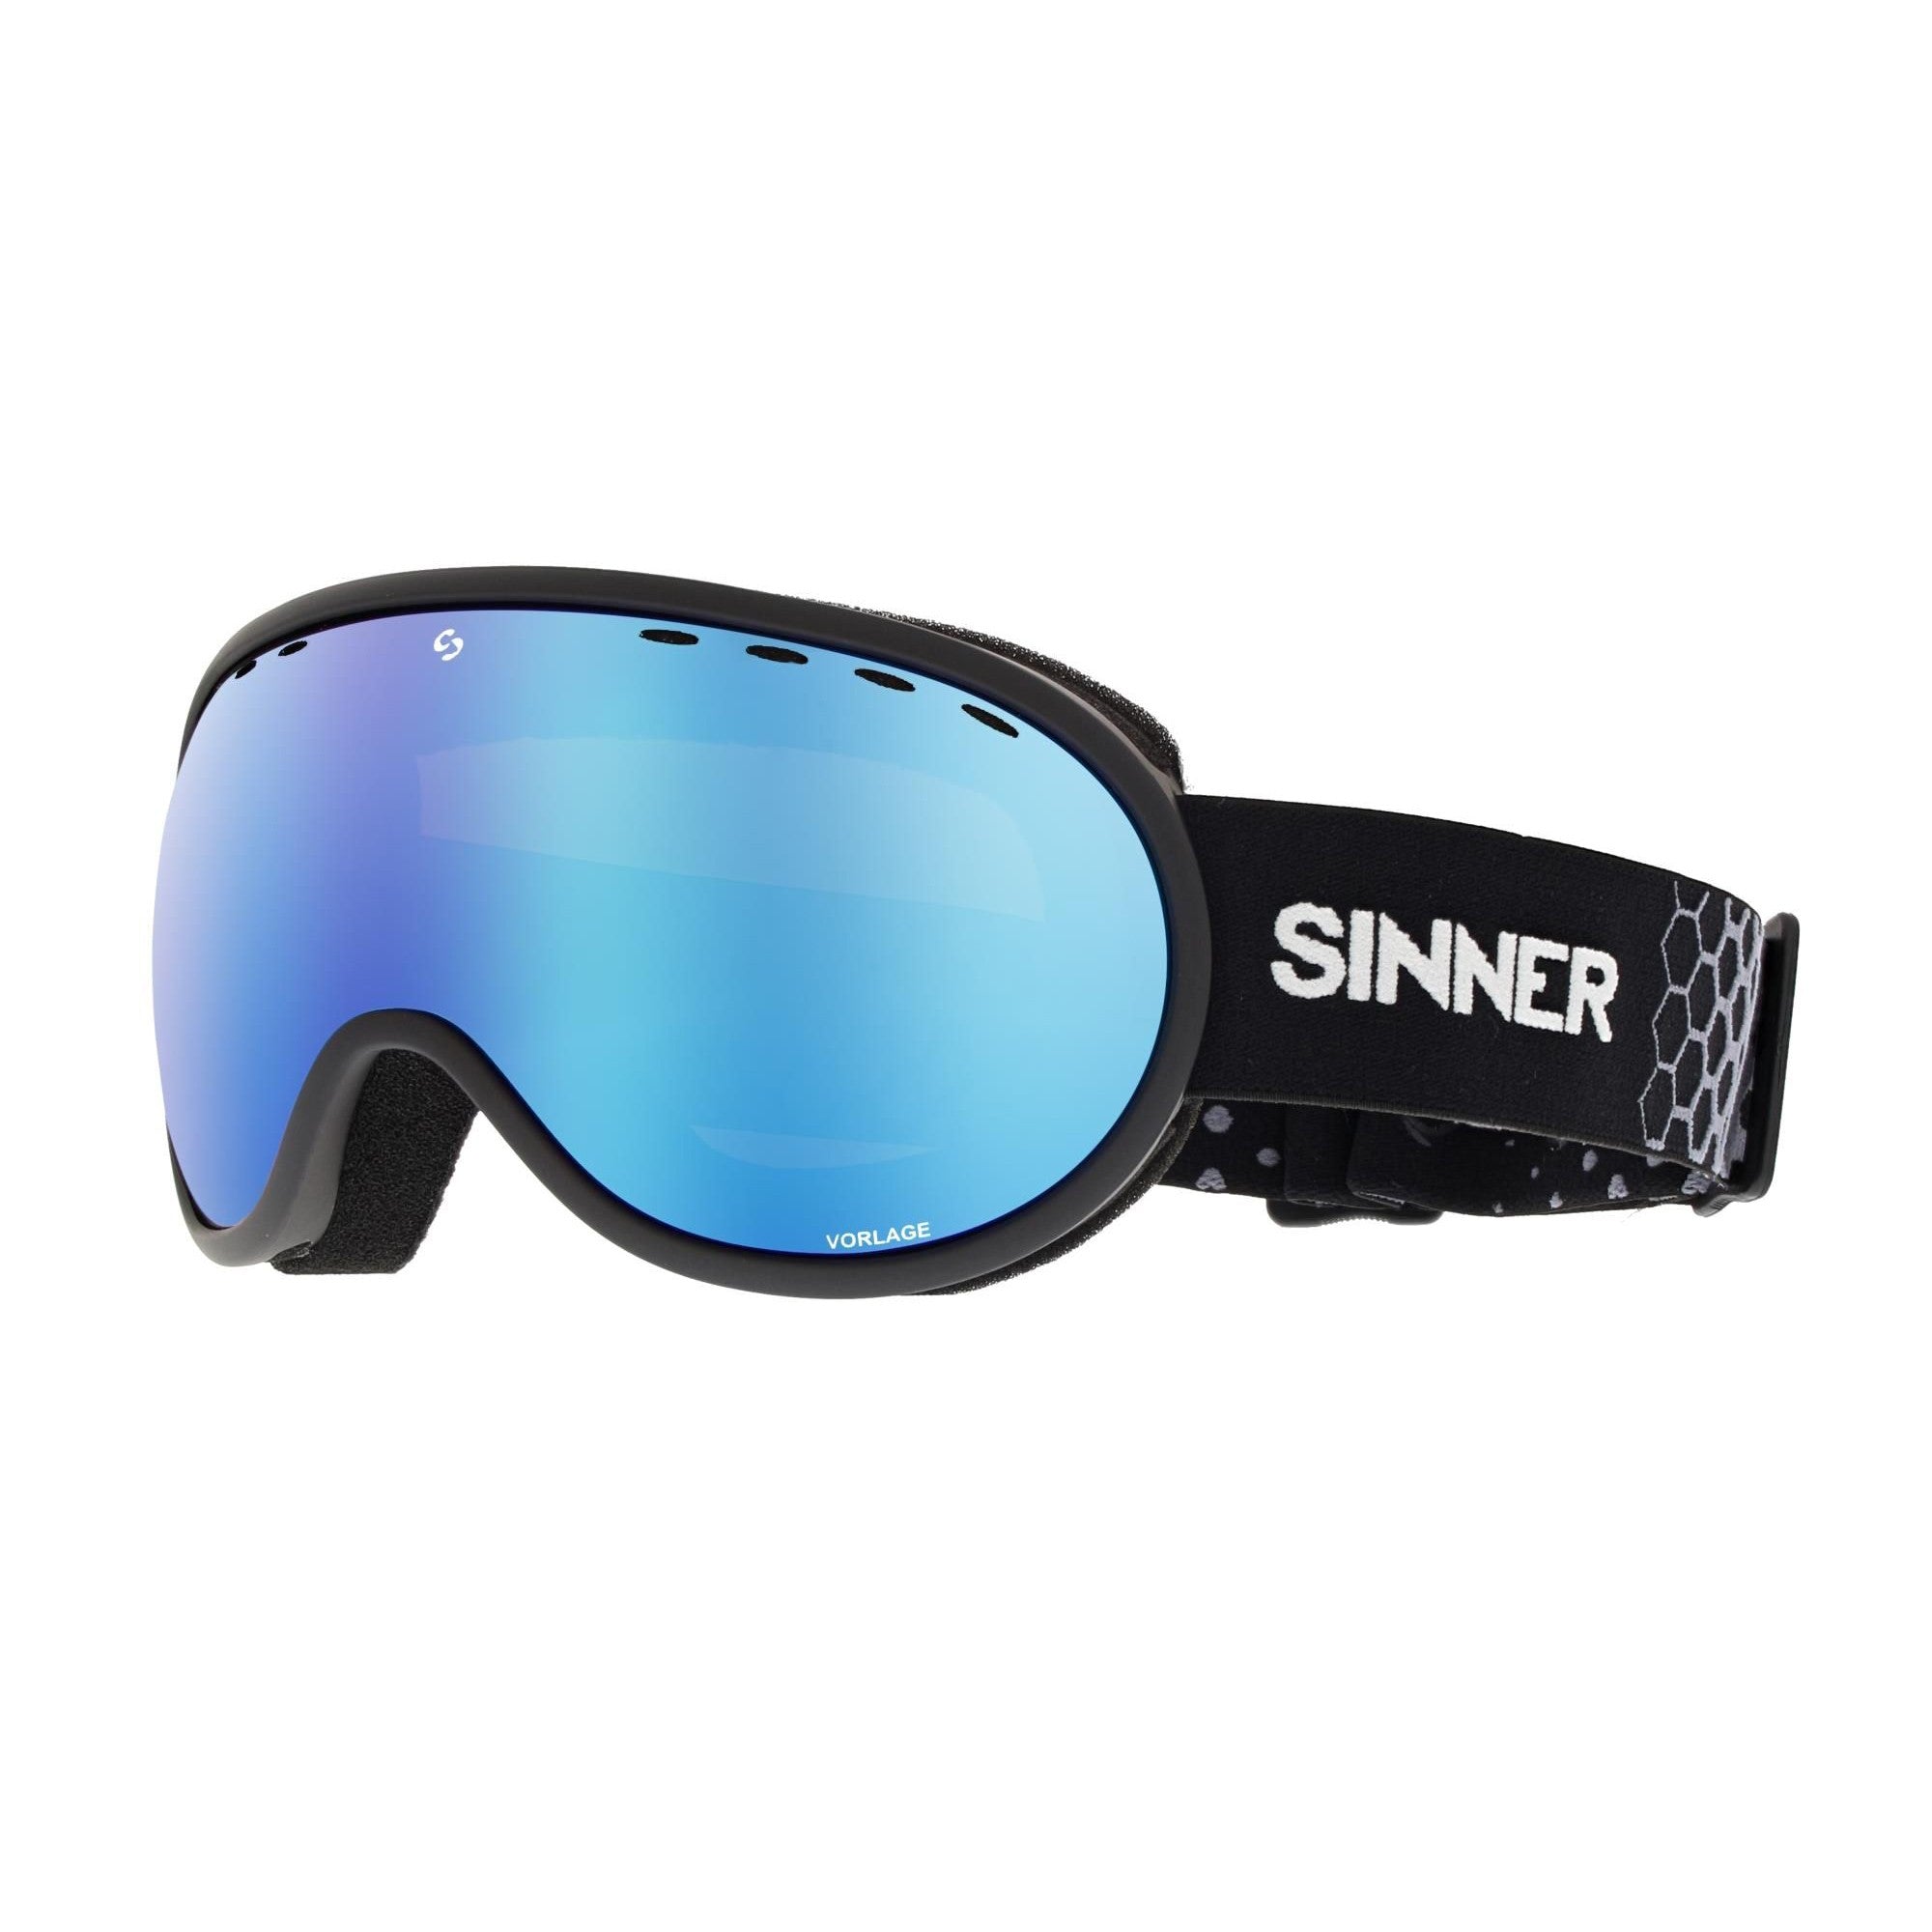 Sinner - Snow Vorlage Mask - Mat Black / Blue Oil